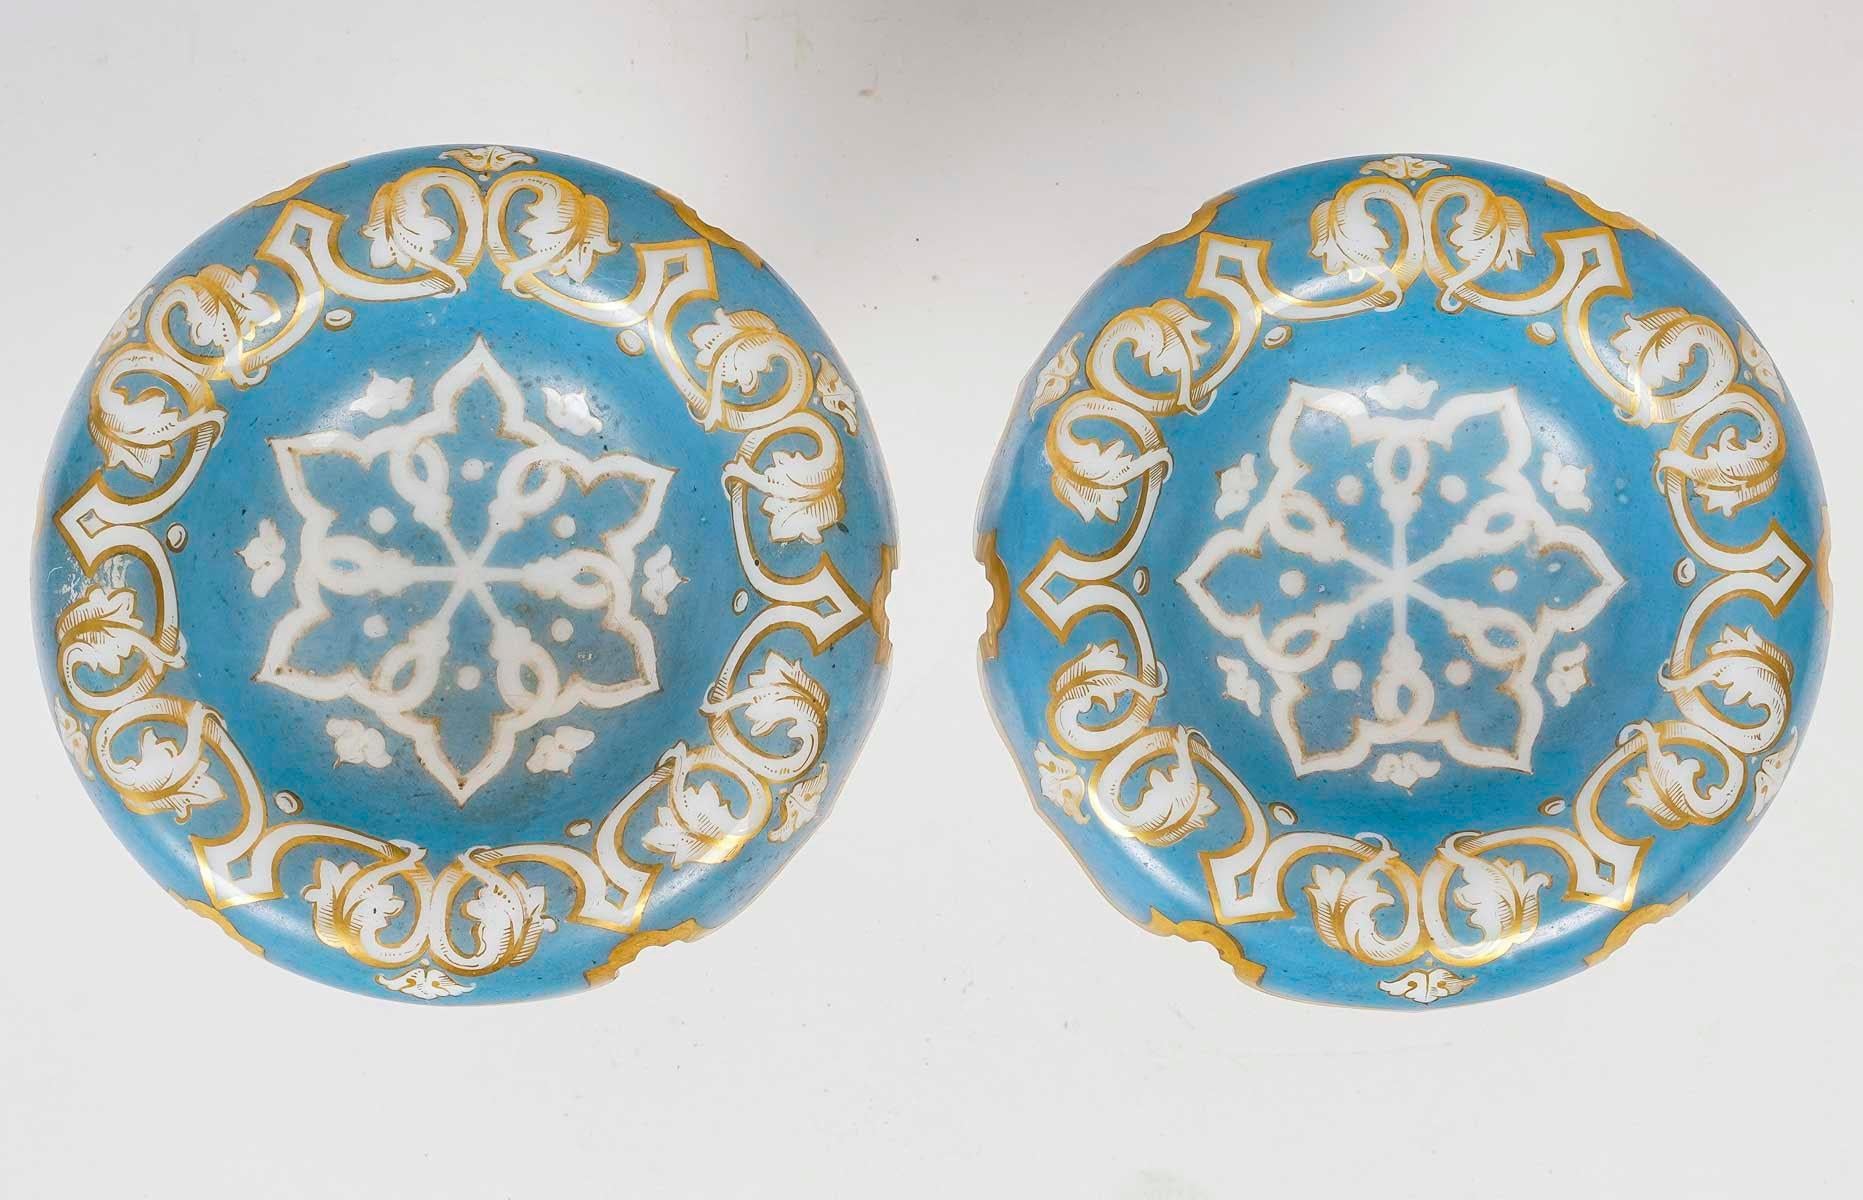 Français Paire de coupes en opaline bleu et or, XIXe siècle, période Napoléon III. en vente